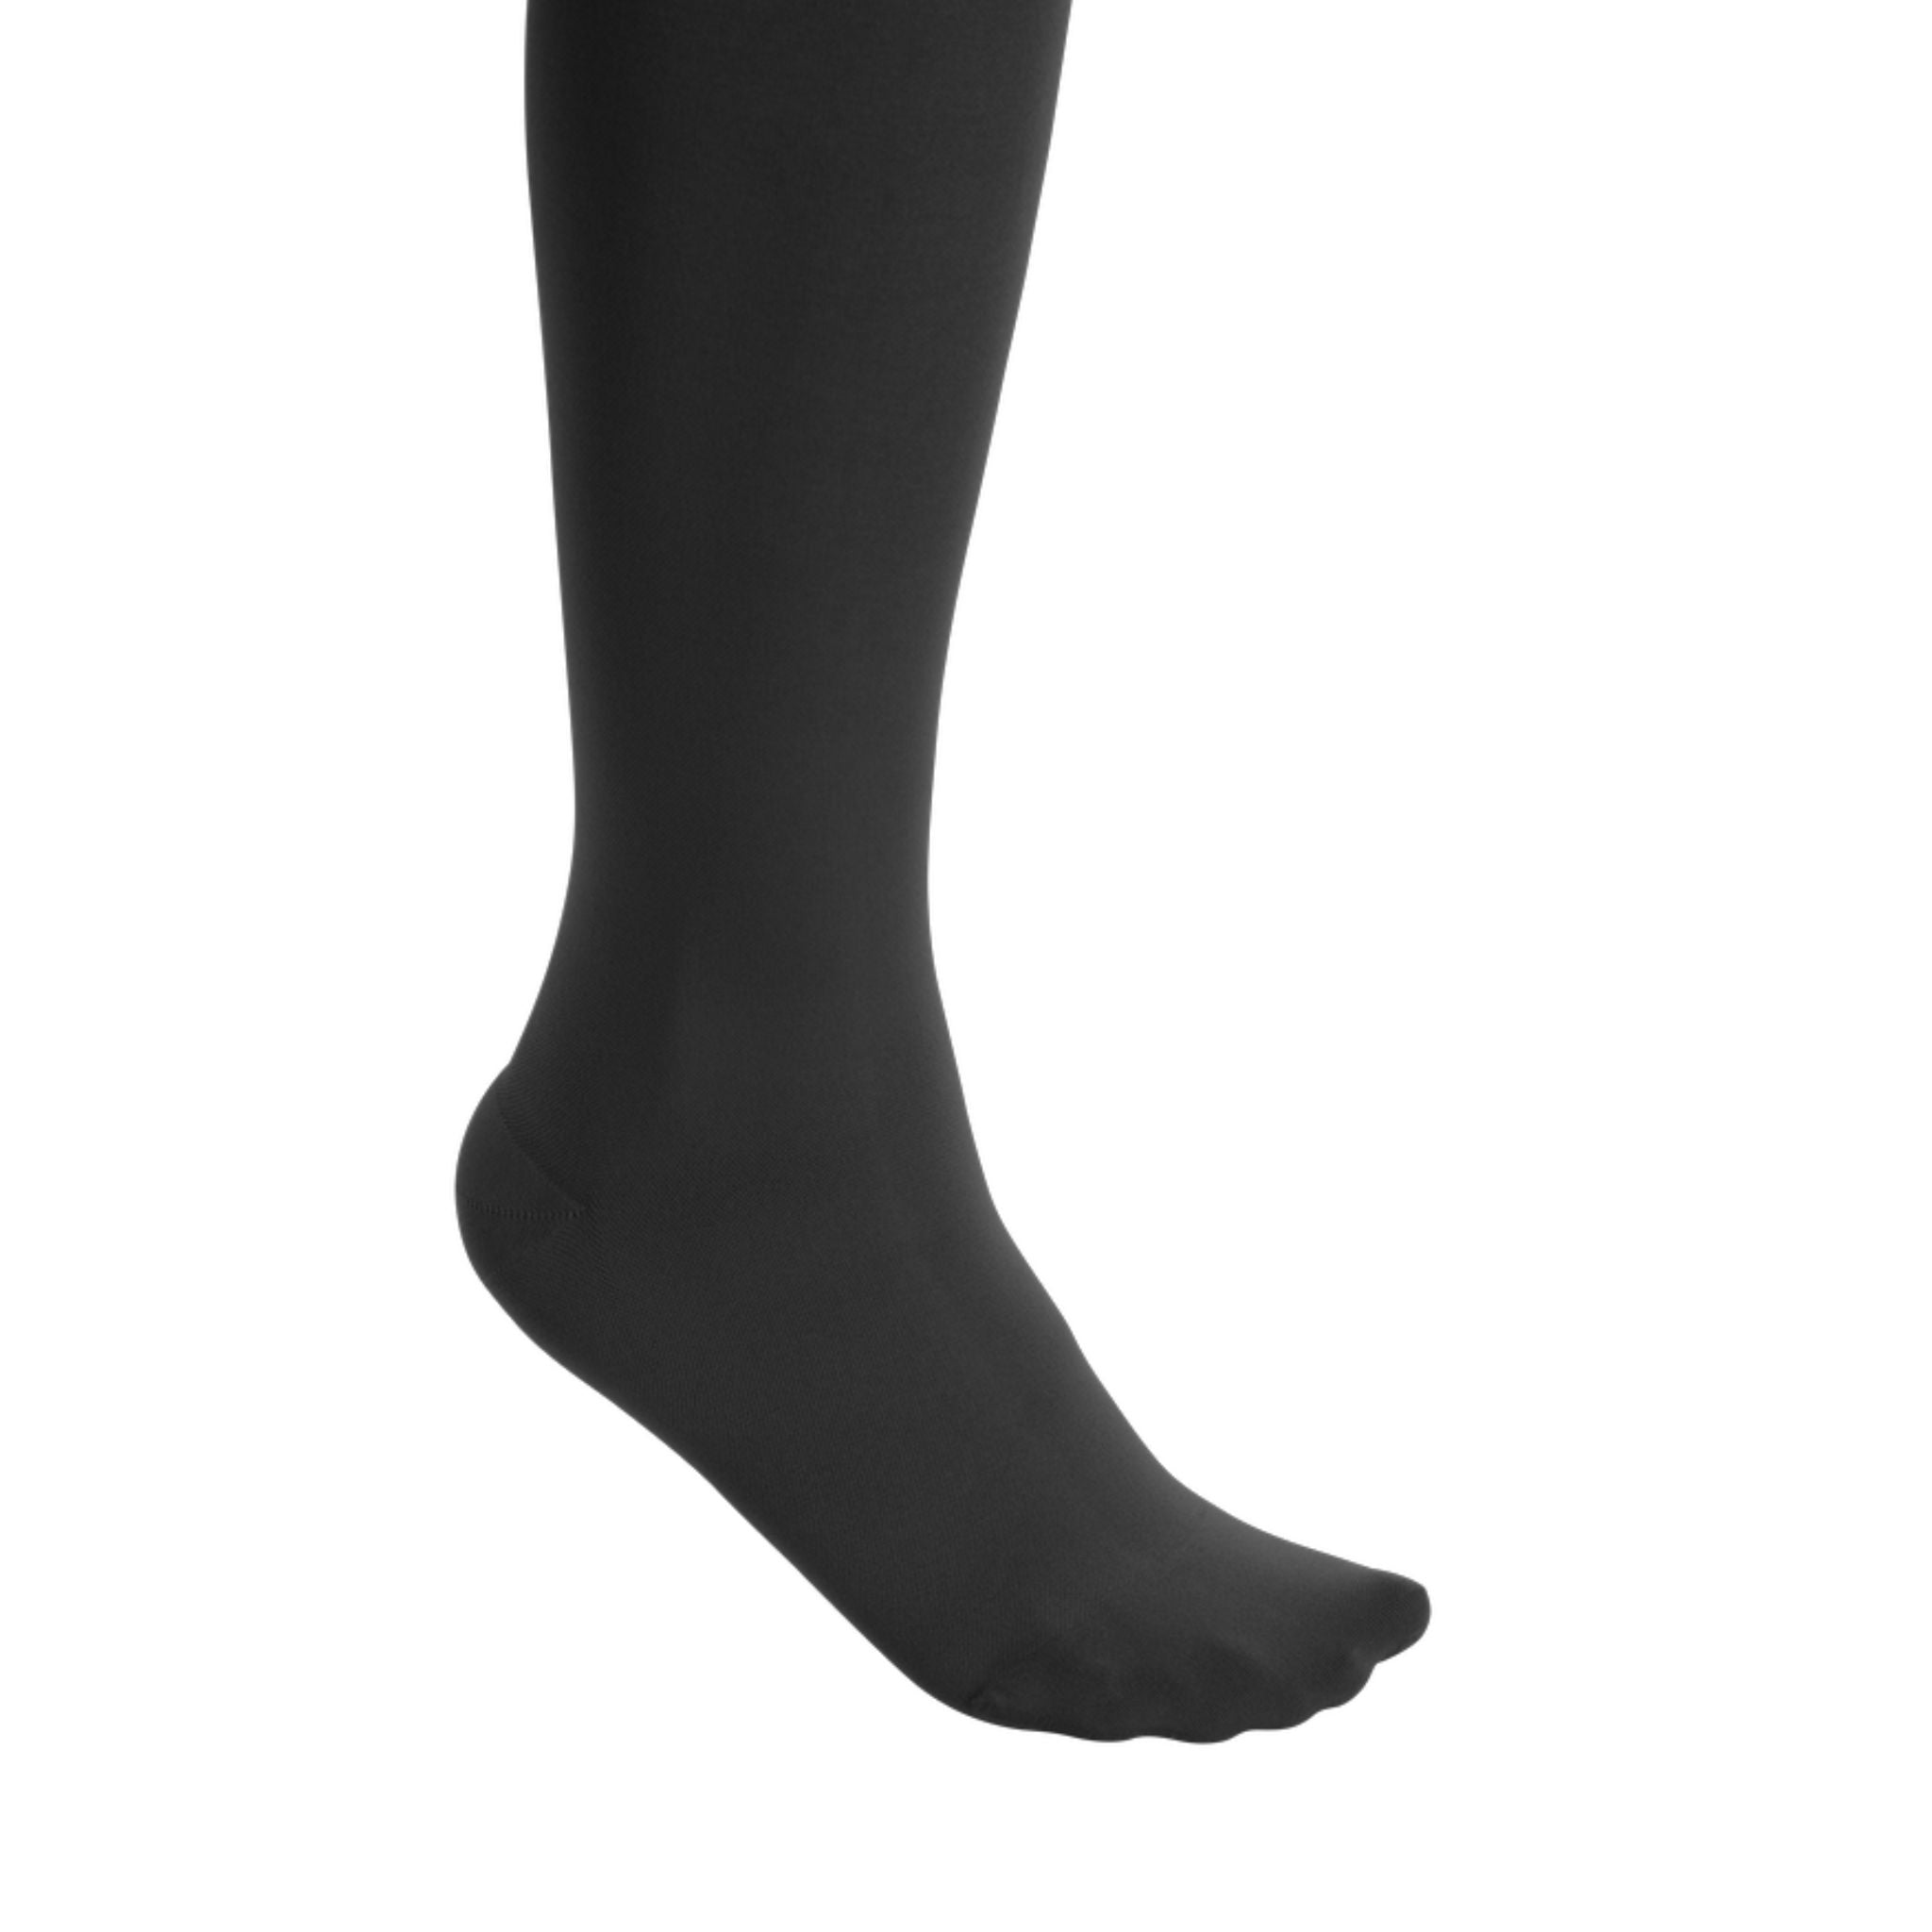 Compression Stockings  Below Knee  Closed Toe  Black  mediven cotton